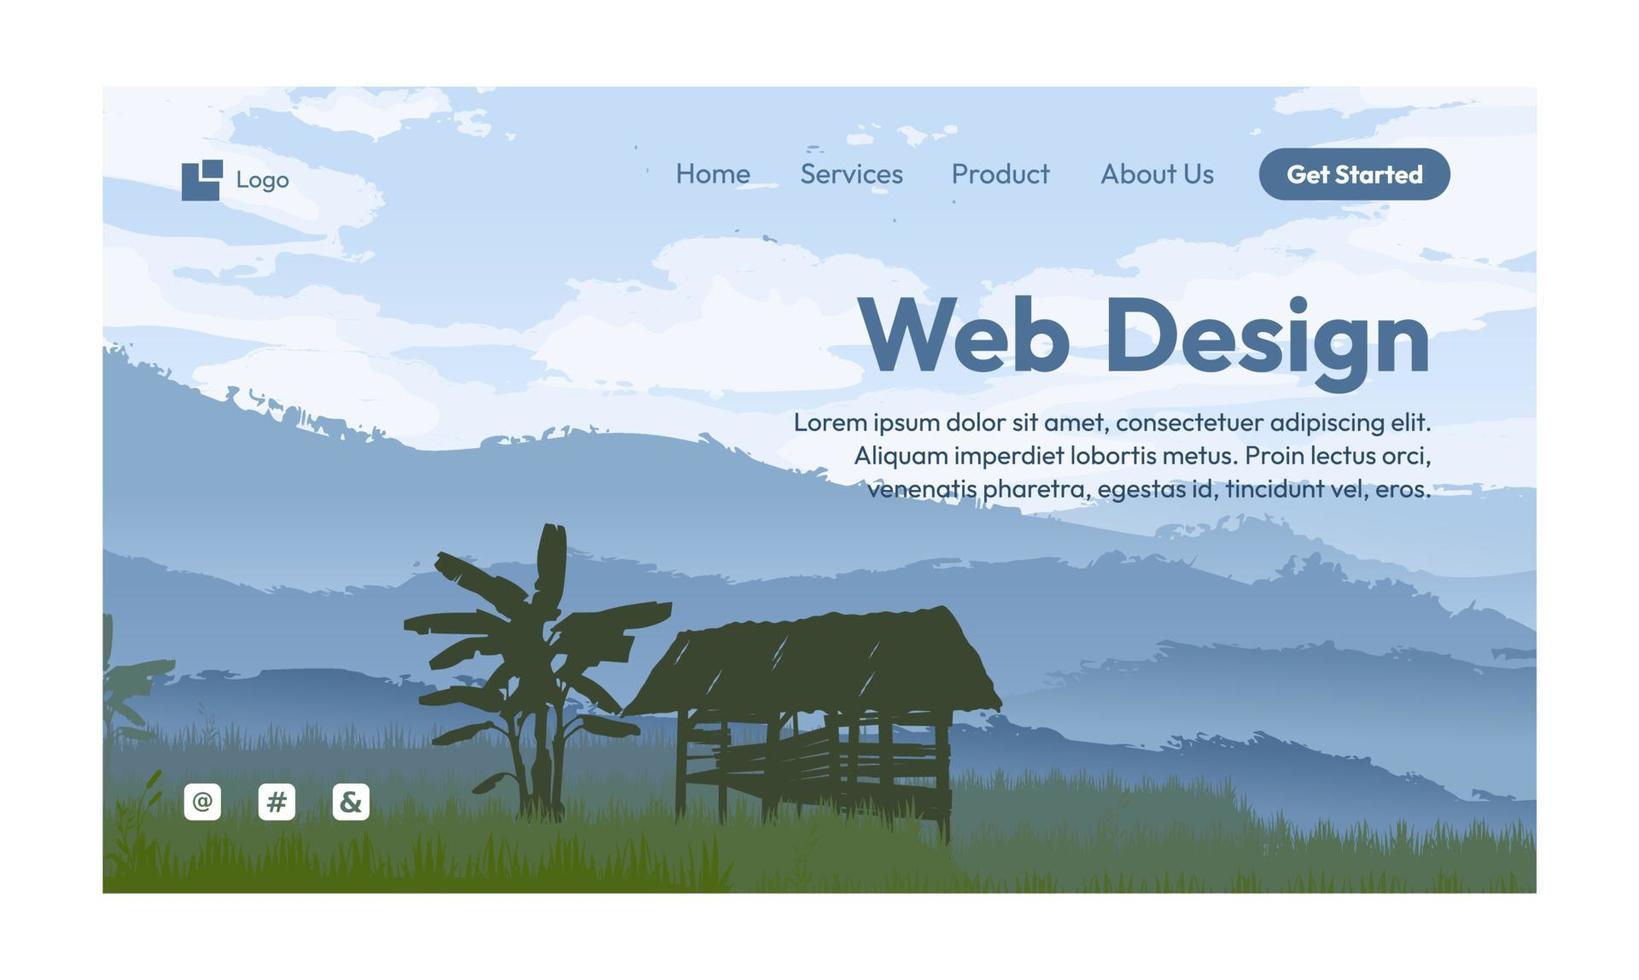 webdesign naturlandschaft flache design-landingpage vektor